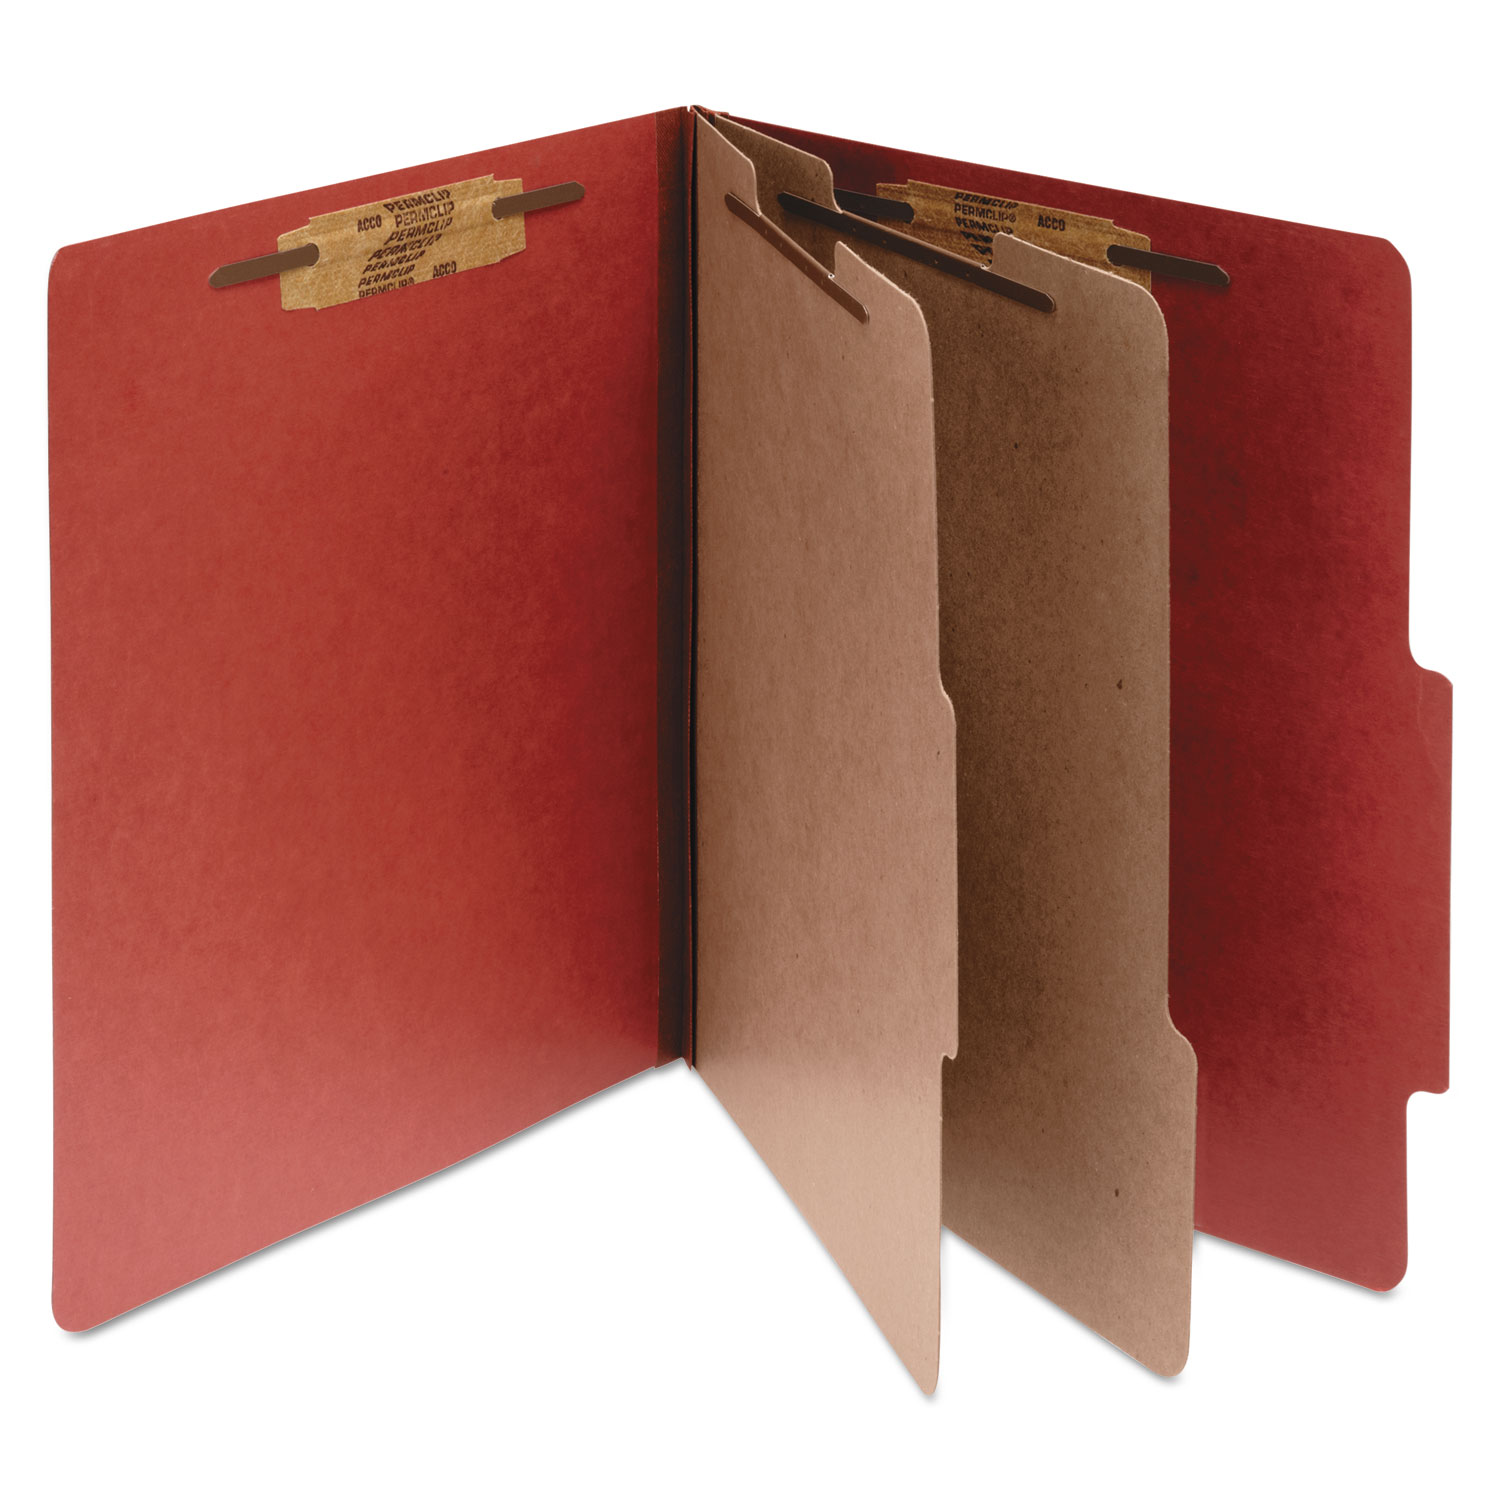  ACCO A7015036 Pressboard Classification Folders, 2 Dividers, Letter Size, Earth Red, 10/Box (ACC15036) 